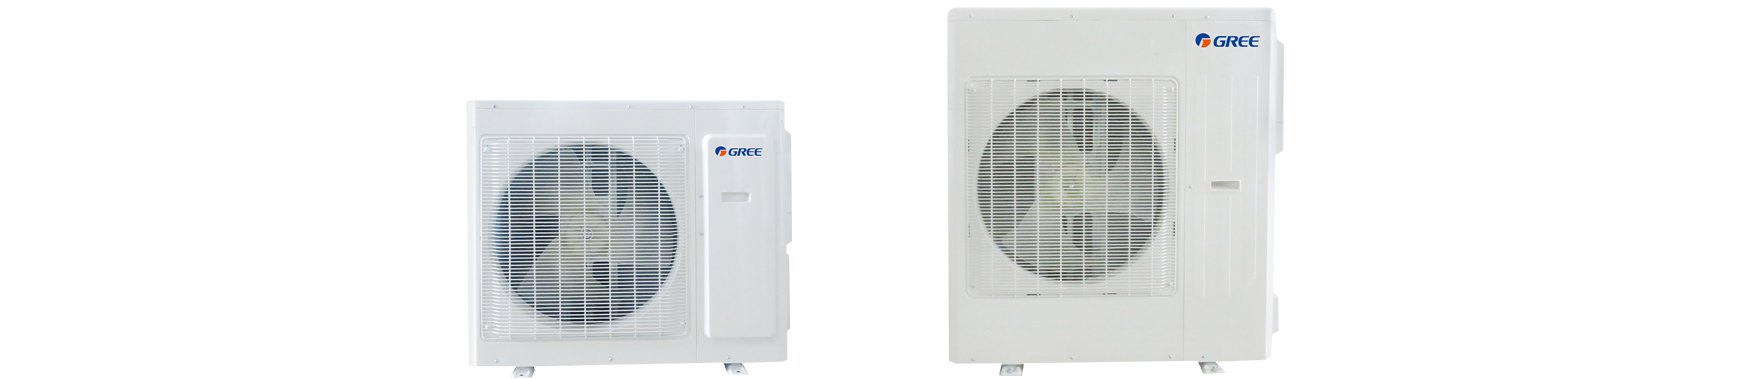 GREE Comfort MULTI21+ multi-zone heat pump unit